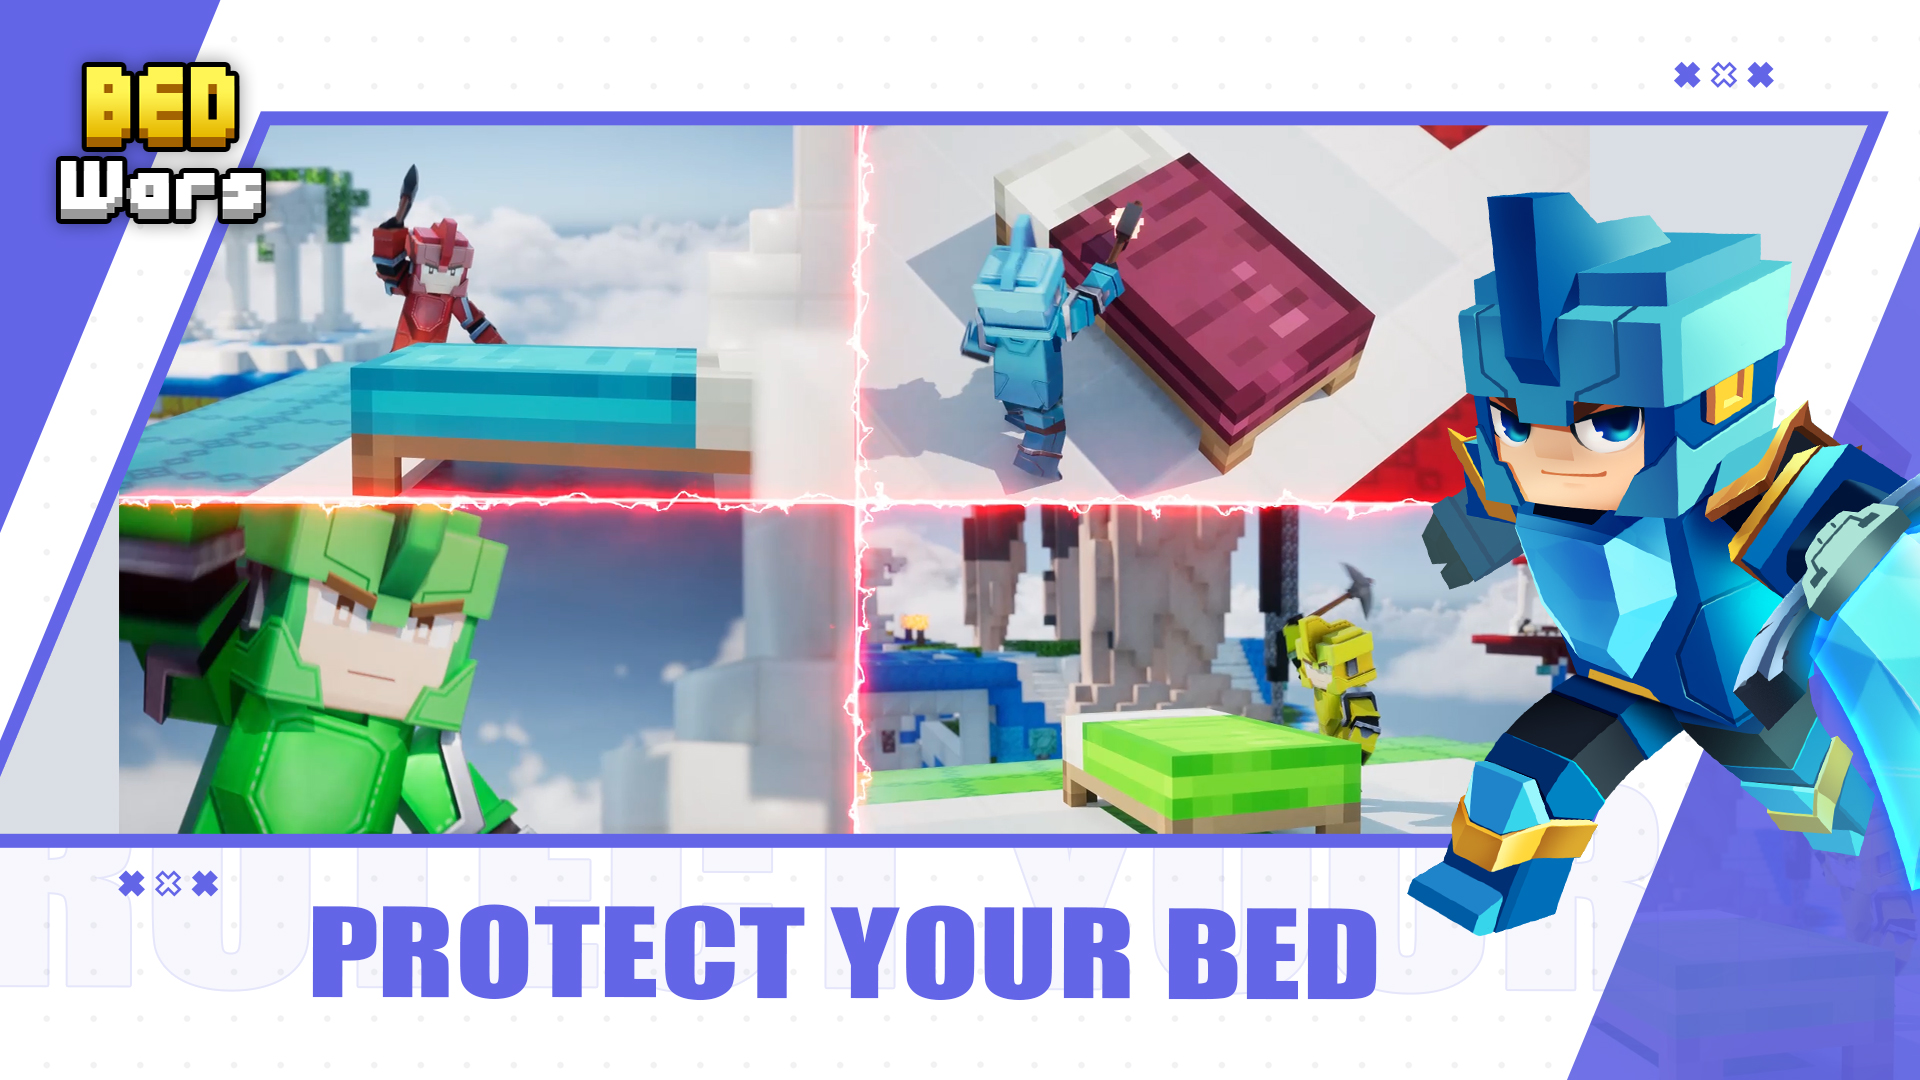 Download & Play Bed Wars on PC & Mac (Emulator)